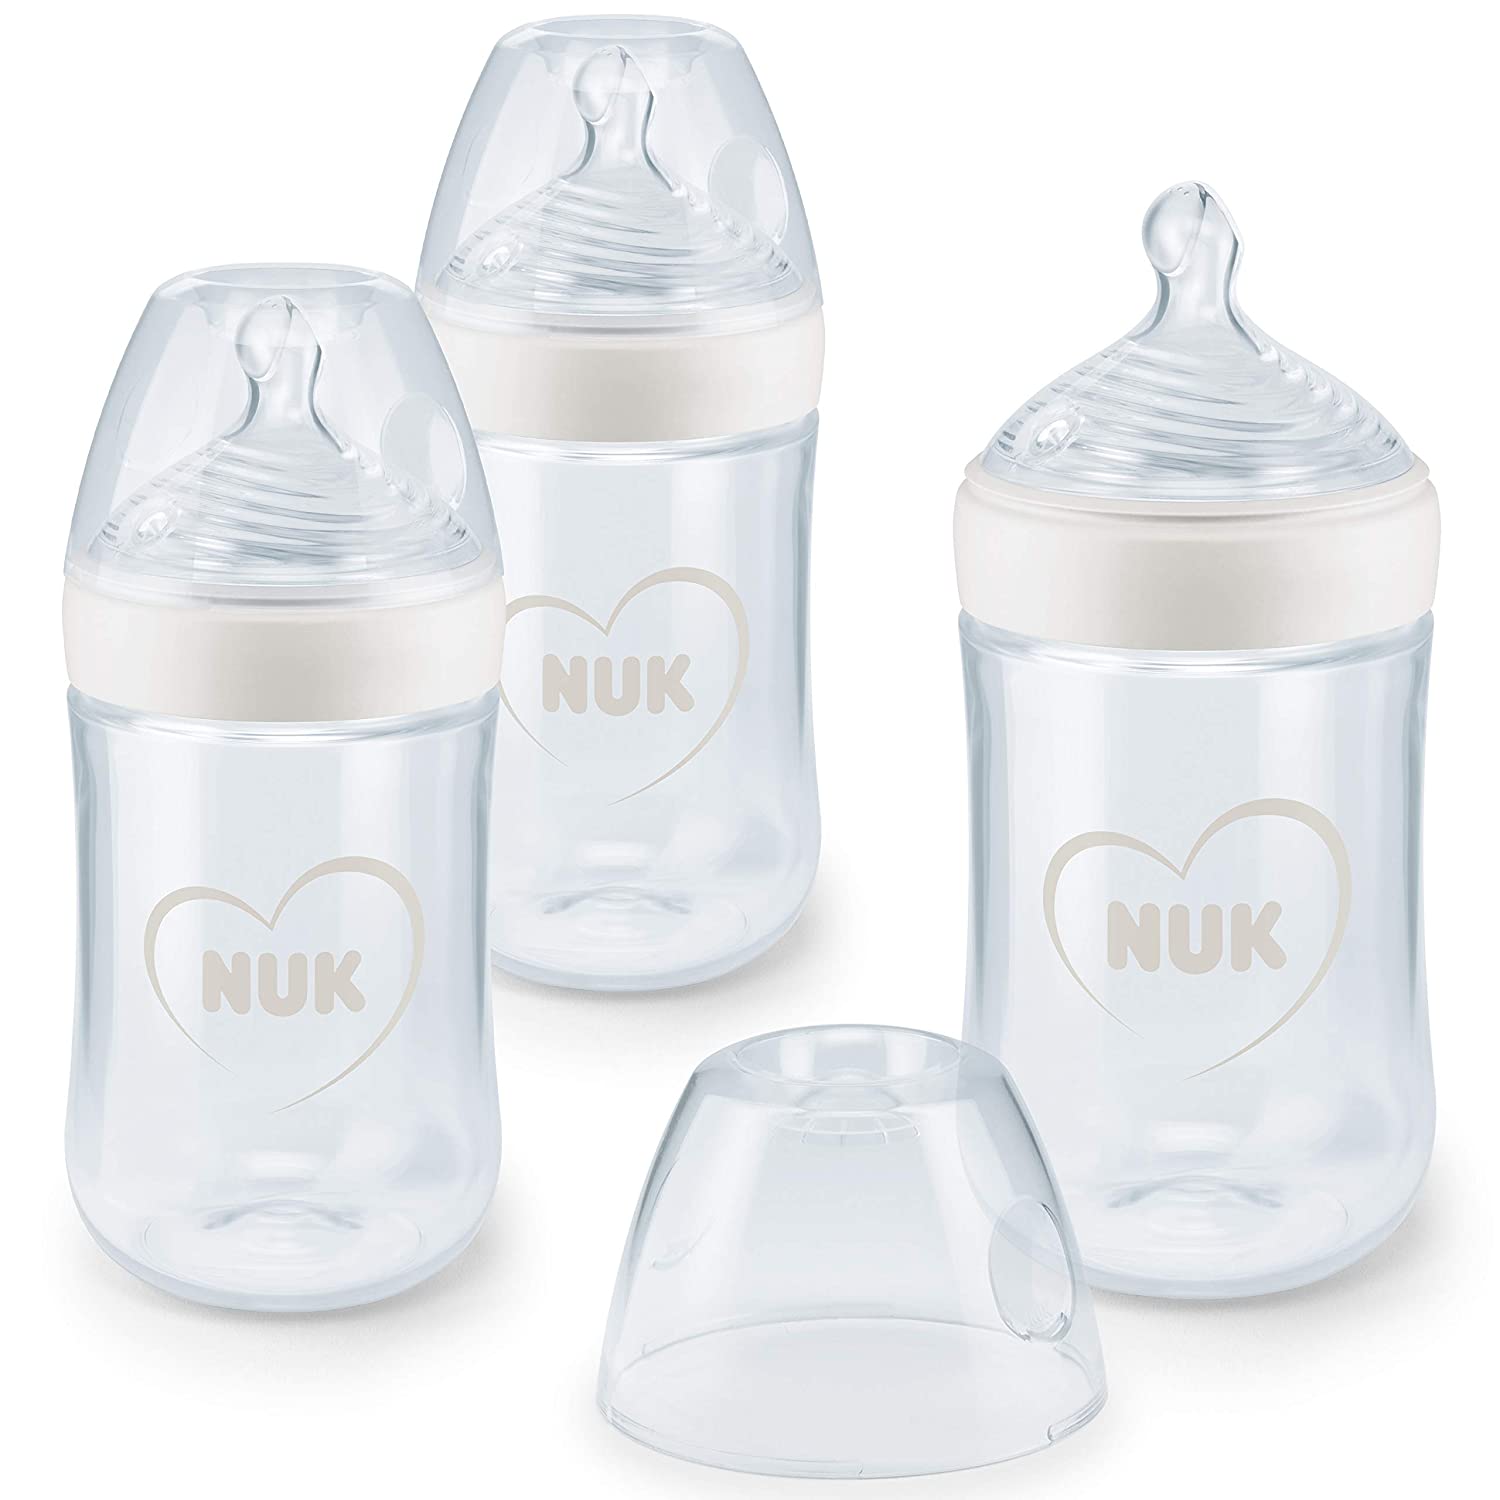 NUK Nature Sense Baby Bottle Set, 6-18 Months, 3x Anti-Colic Baby Bottles, BPA (Bisphenol-A) Free, 260 ml, Heart (Neutral), Pack of 3